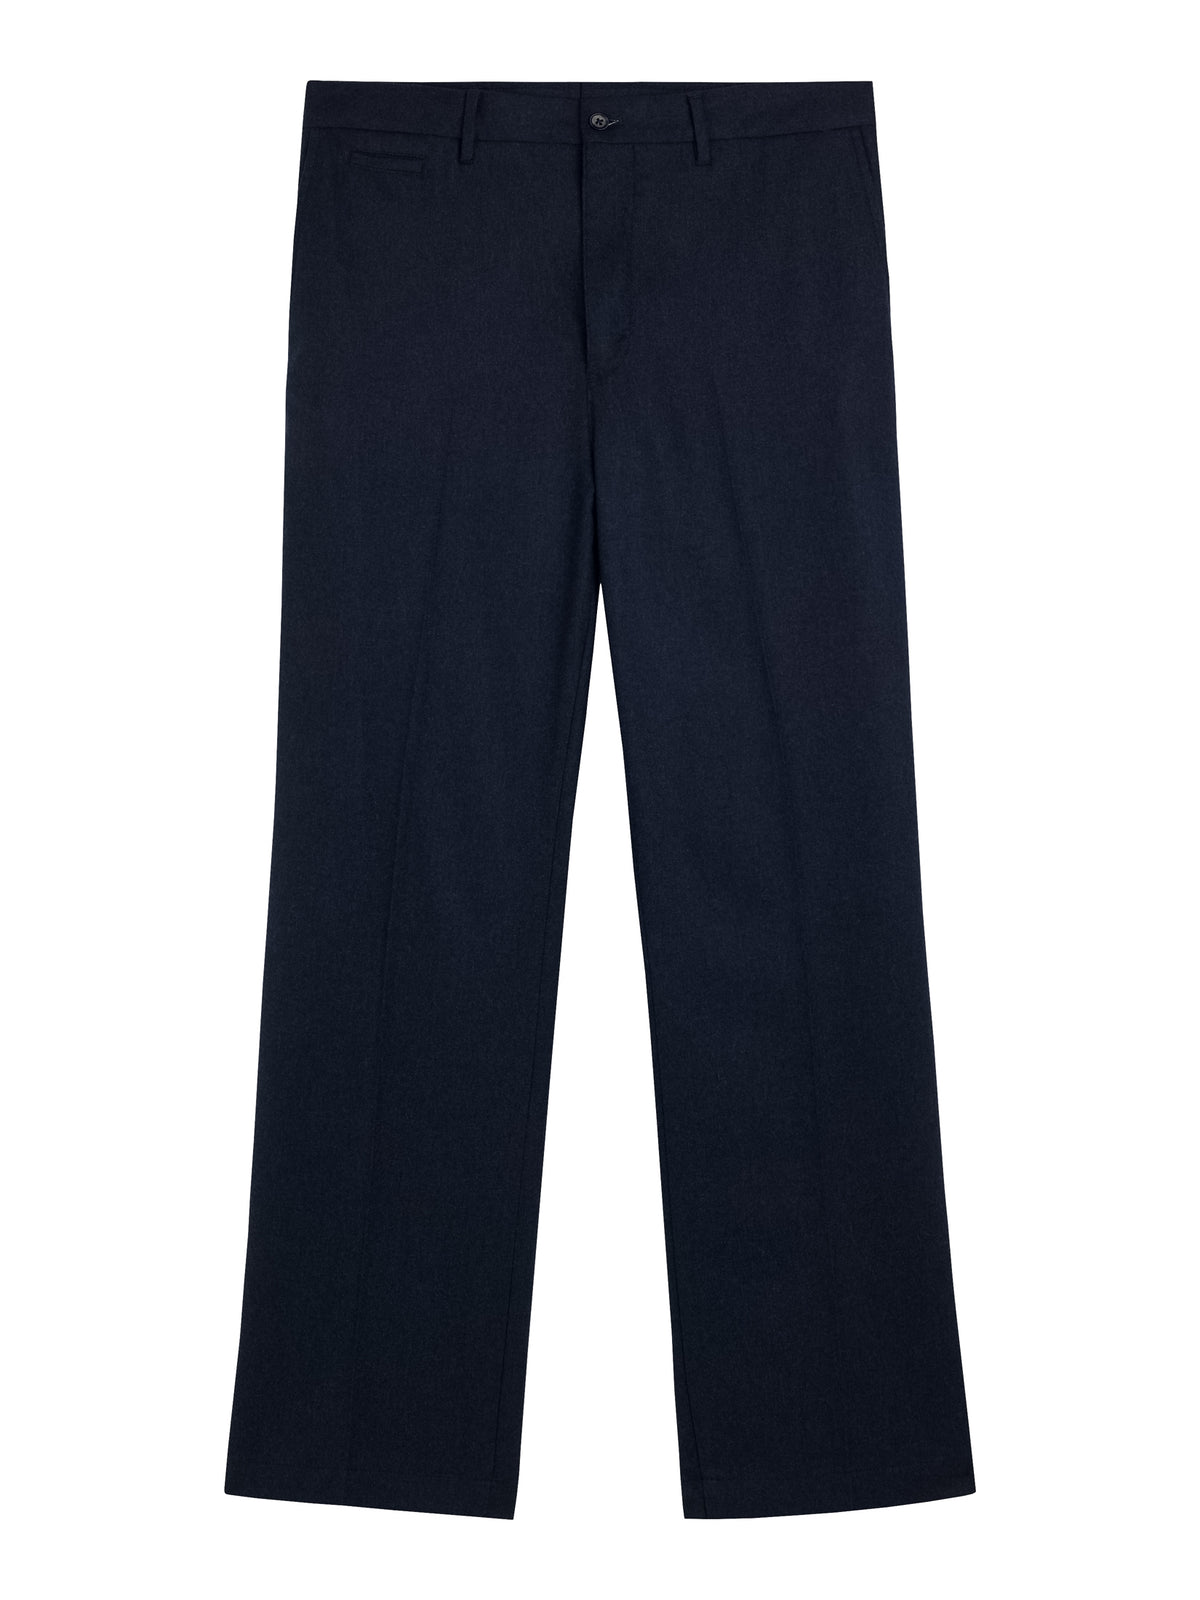 Haij Clean Flannel Pants / JL Navy